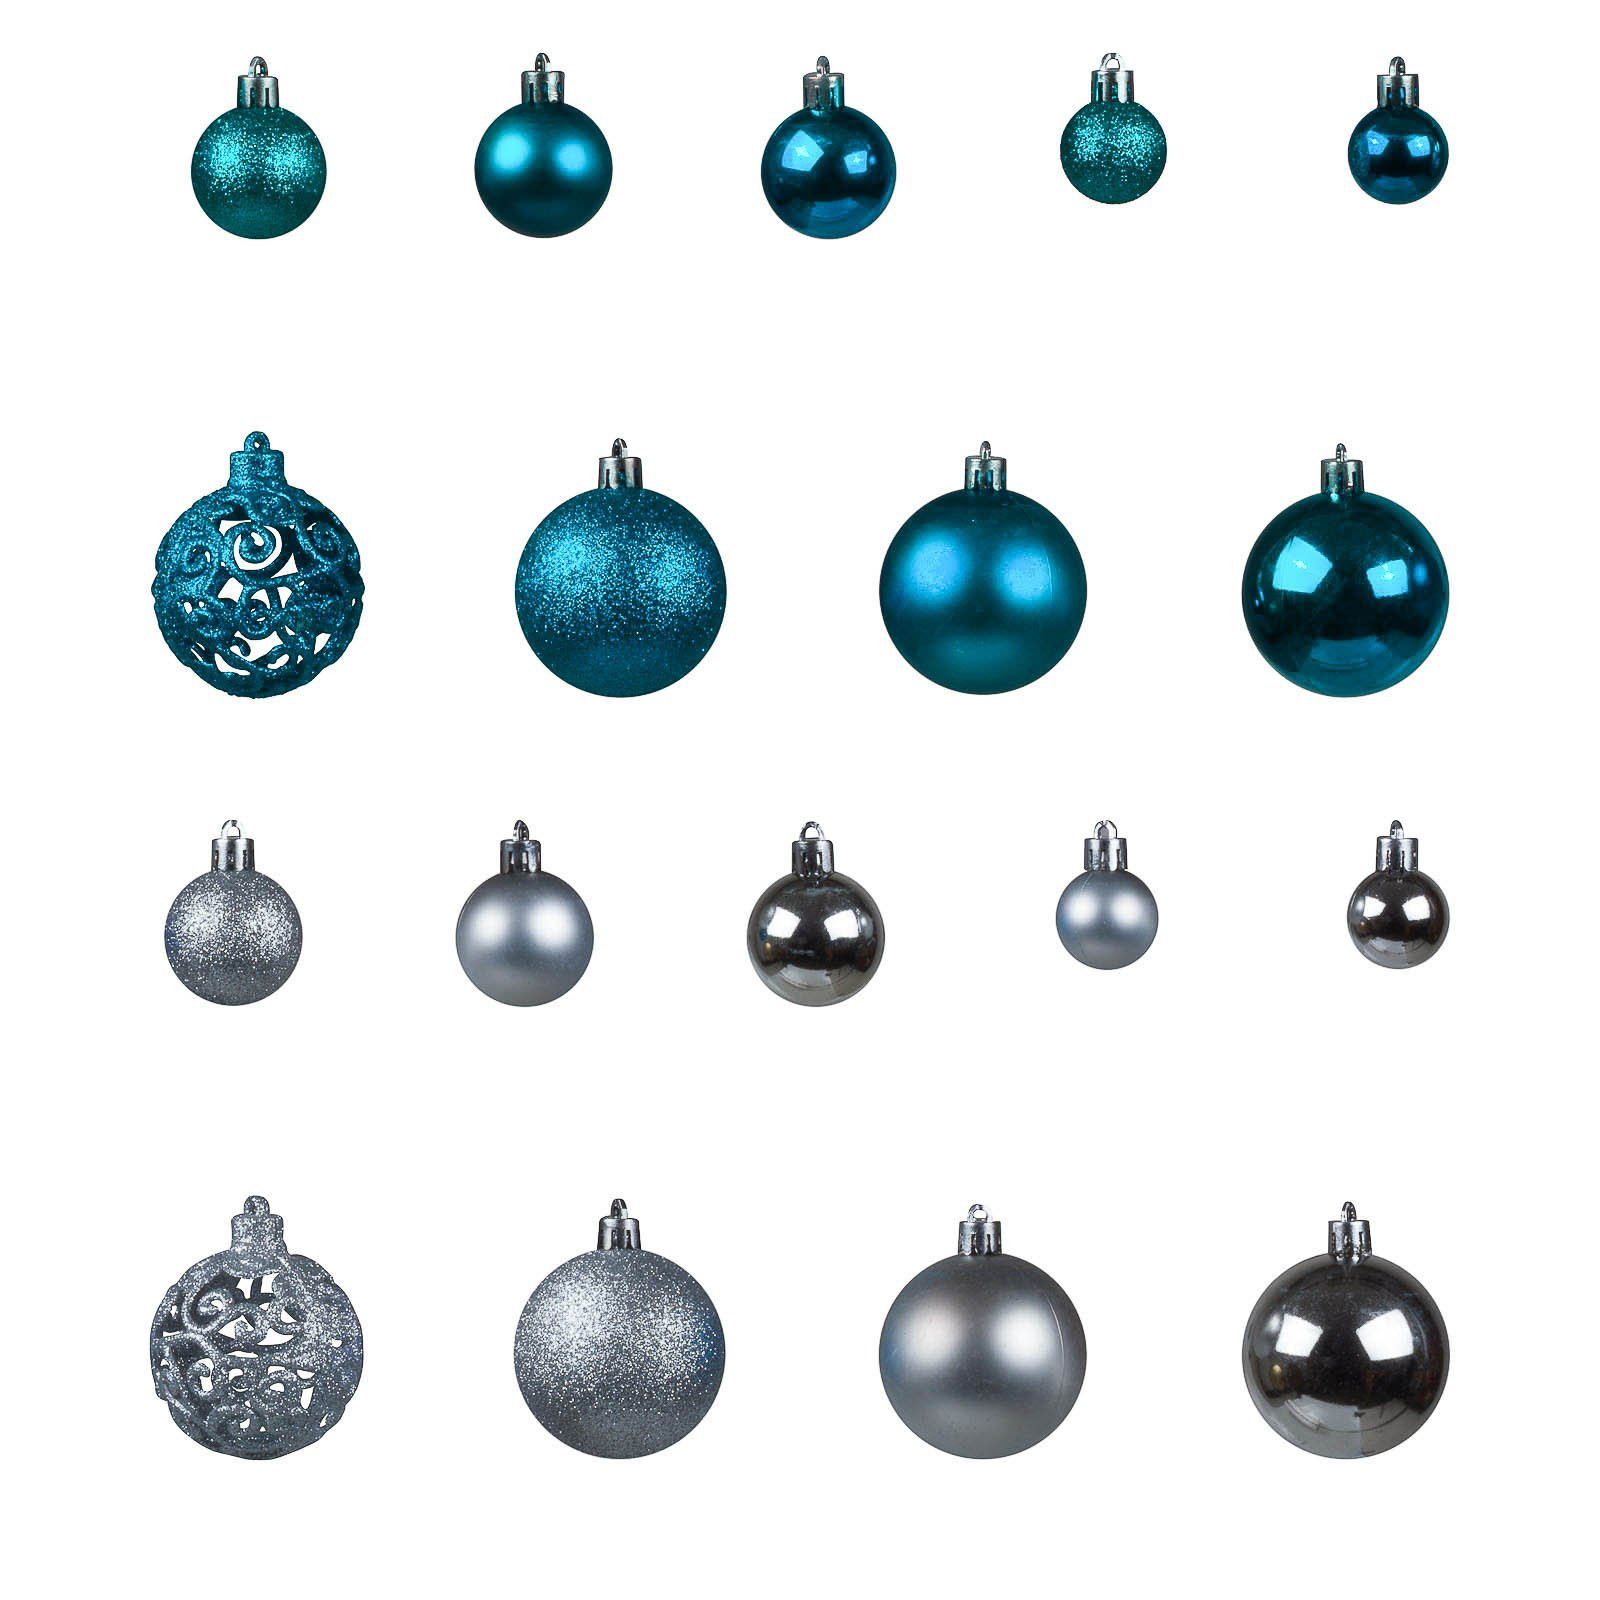 Farben verschiedene FSH St) Weihnachtsbaumkugel Christbaumschmuck Kugeln Aqua/Silber (100 100tlg Weihnachtskugelset